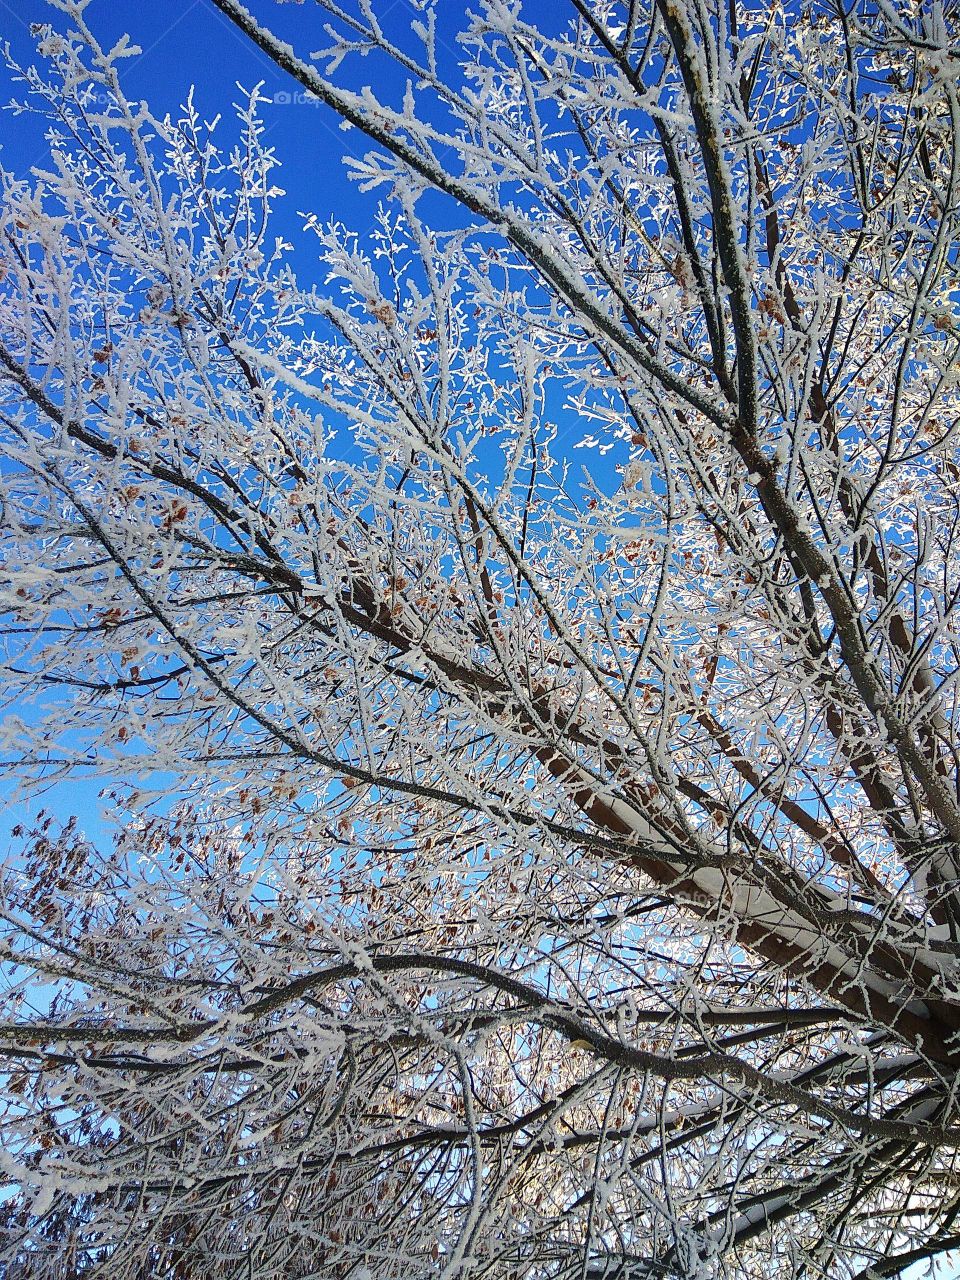 Frozen tree during winter